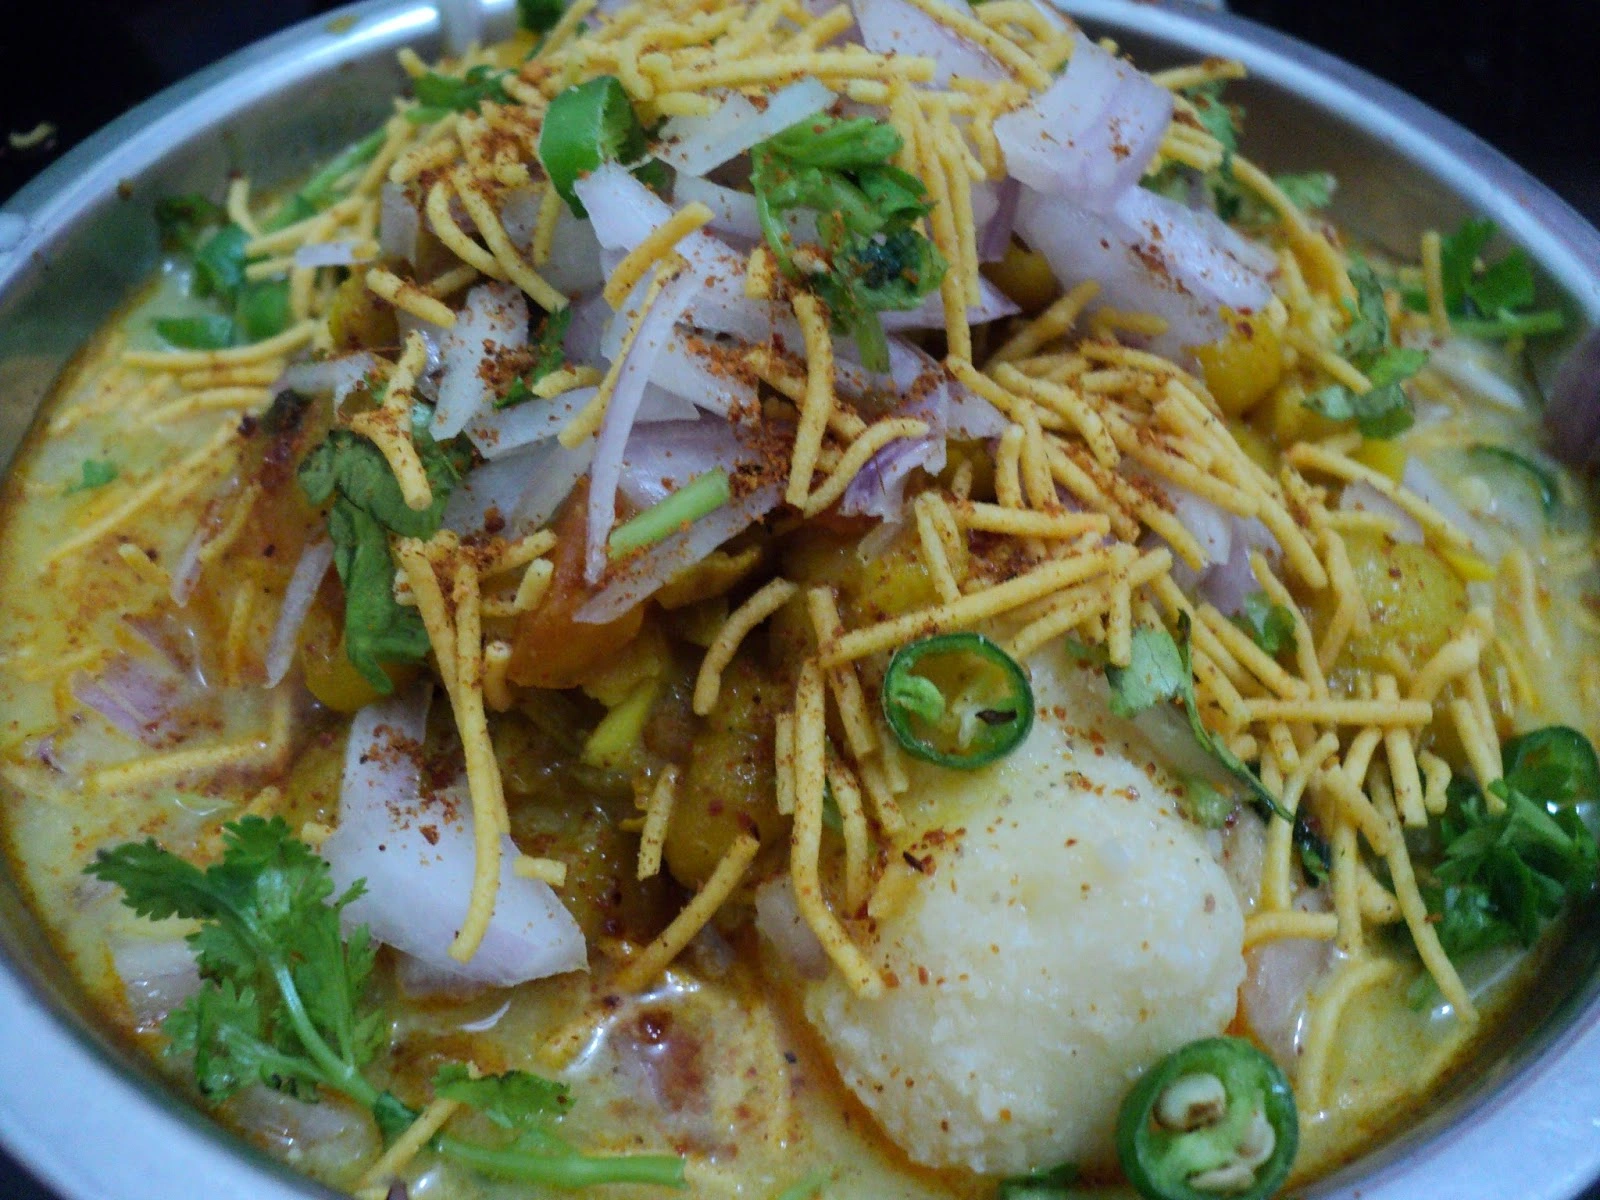 A plate of Dahi Bara Aloo Dum showcasing the tangy yogurt sauce with lentil dumplings and spicy potato curry.